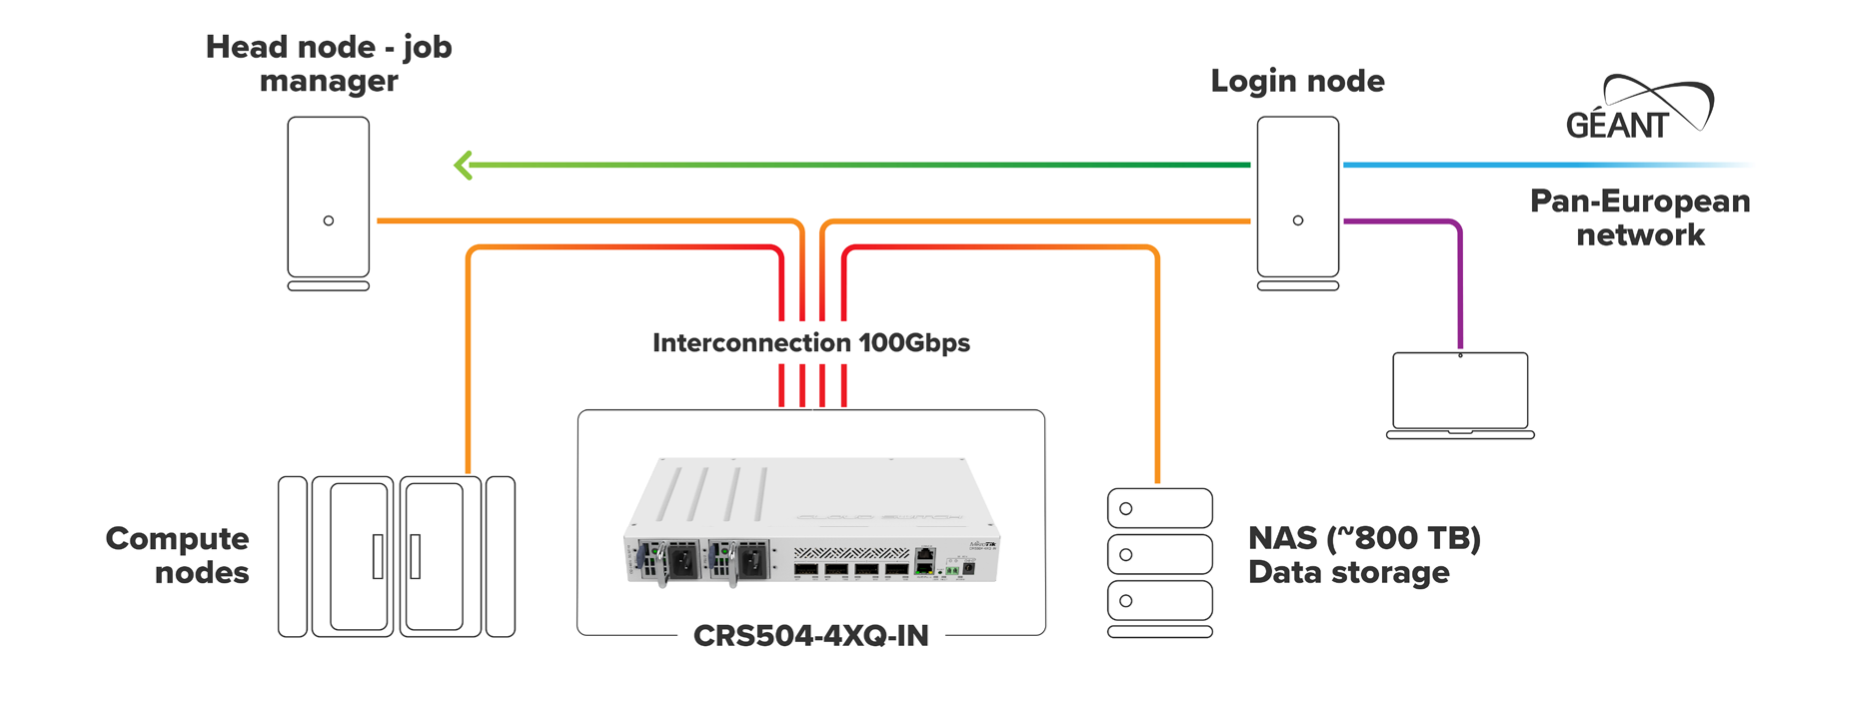 Схема соединения маршрутизатора CRS504-4XQ-IN